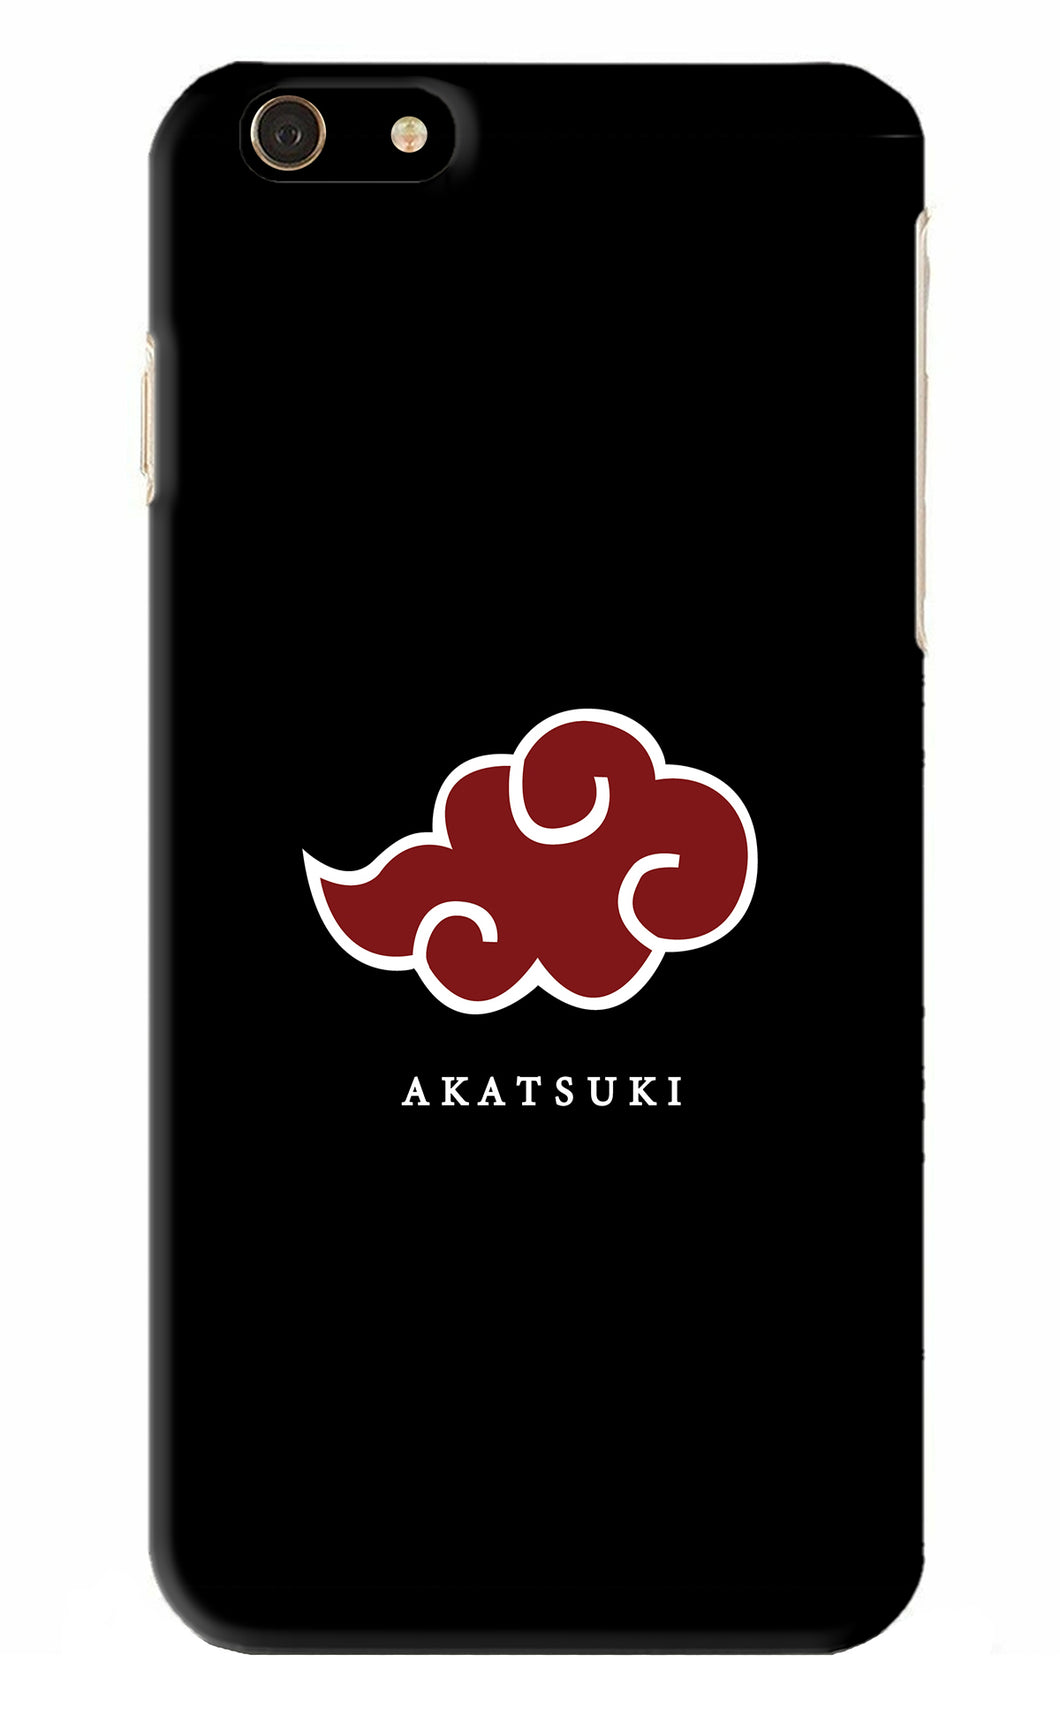 Akatsuki 1 iPhone 6 Plus Back Skin Wrap